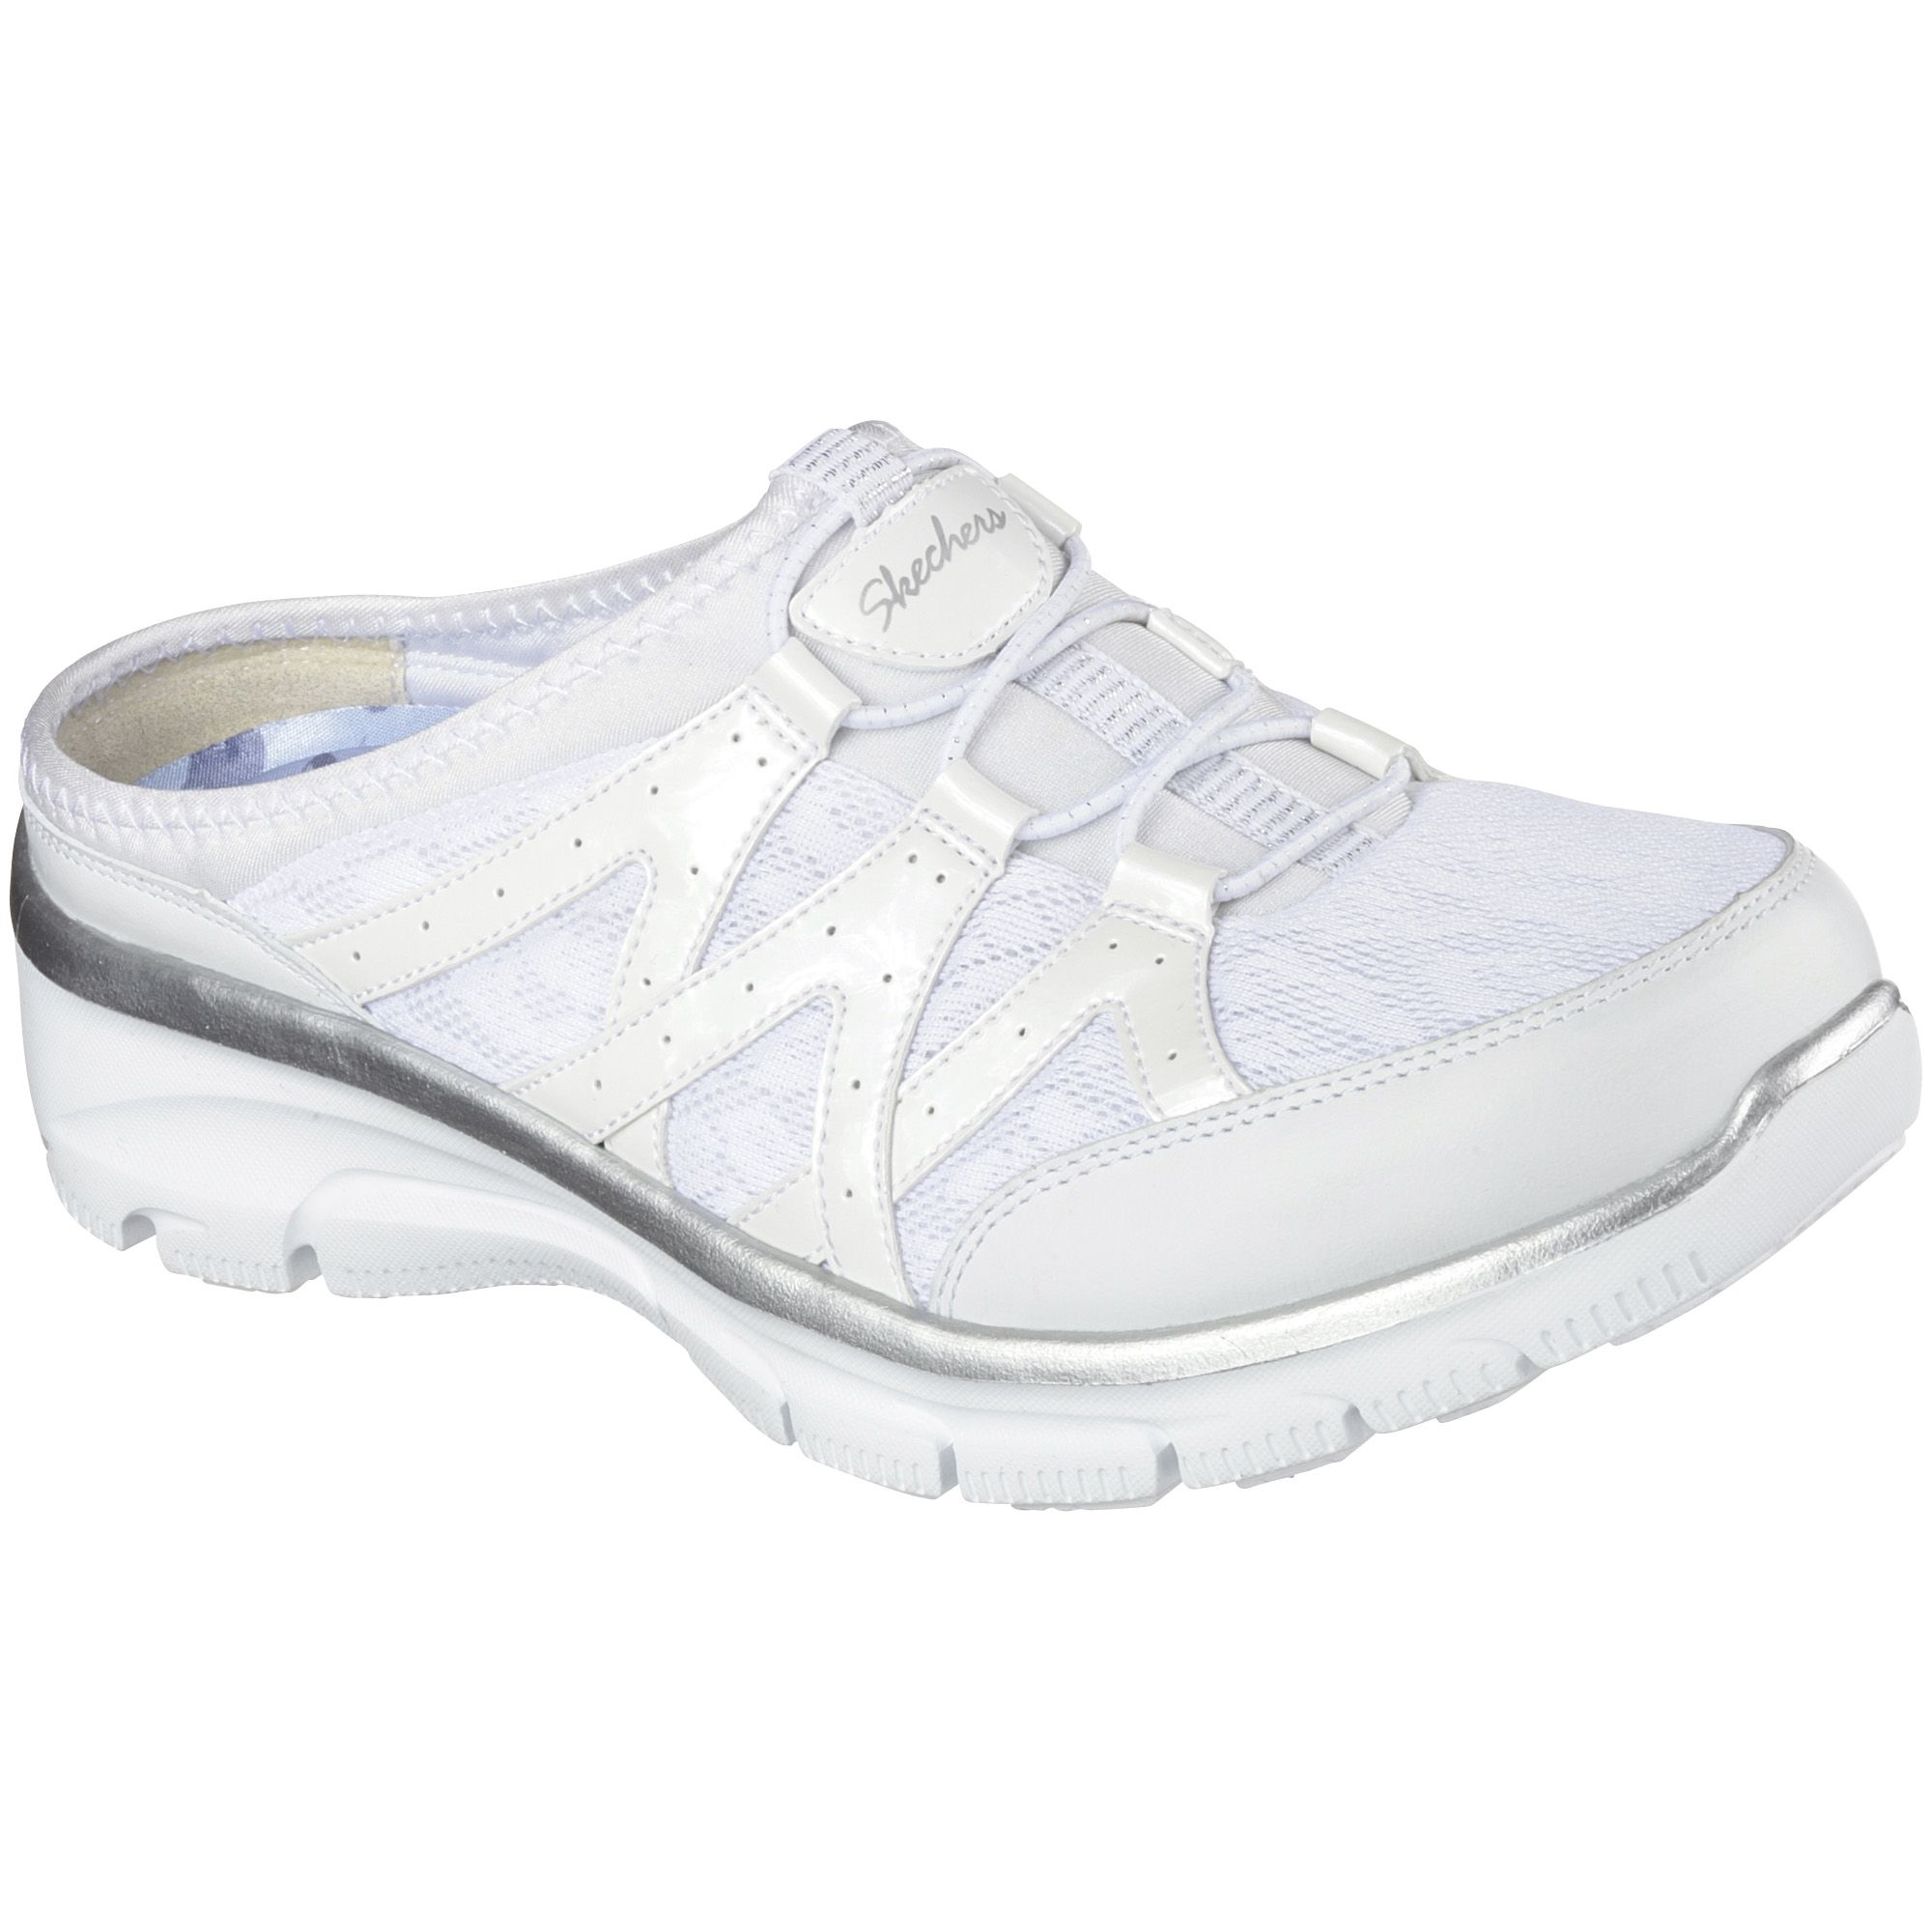 Rechazar Debilidad Interesante Fingerhut - Skechers Women's Relaxed Fit Easy Going Repute Shoe -  White/Silver